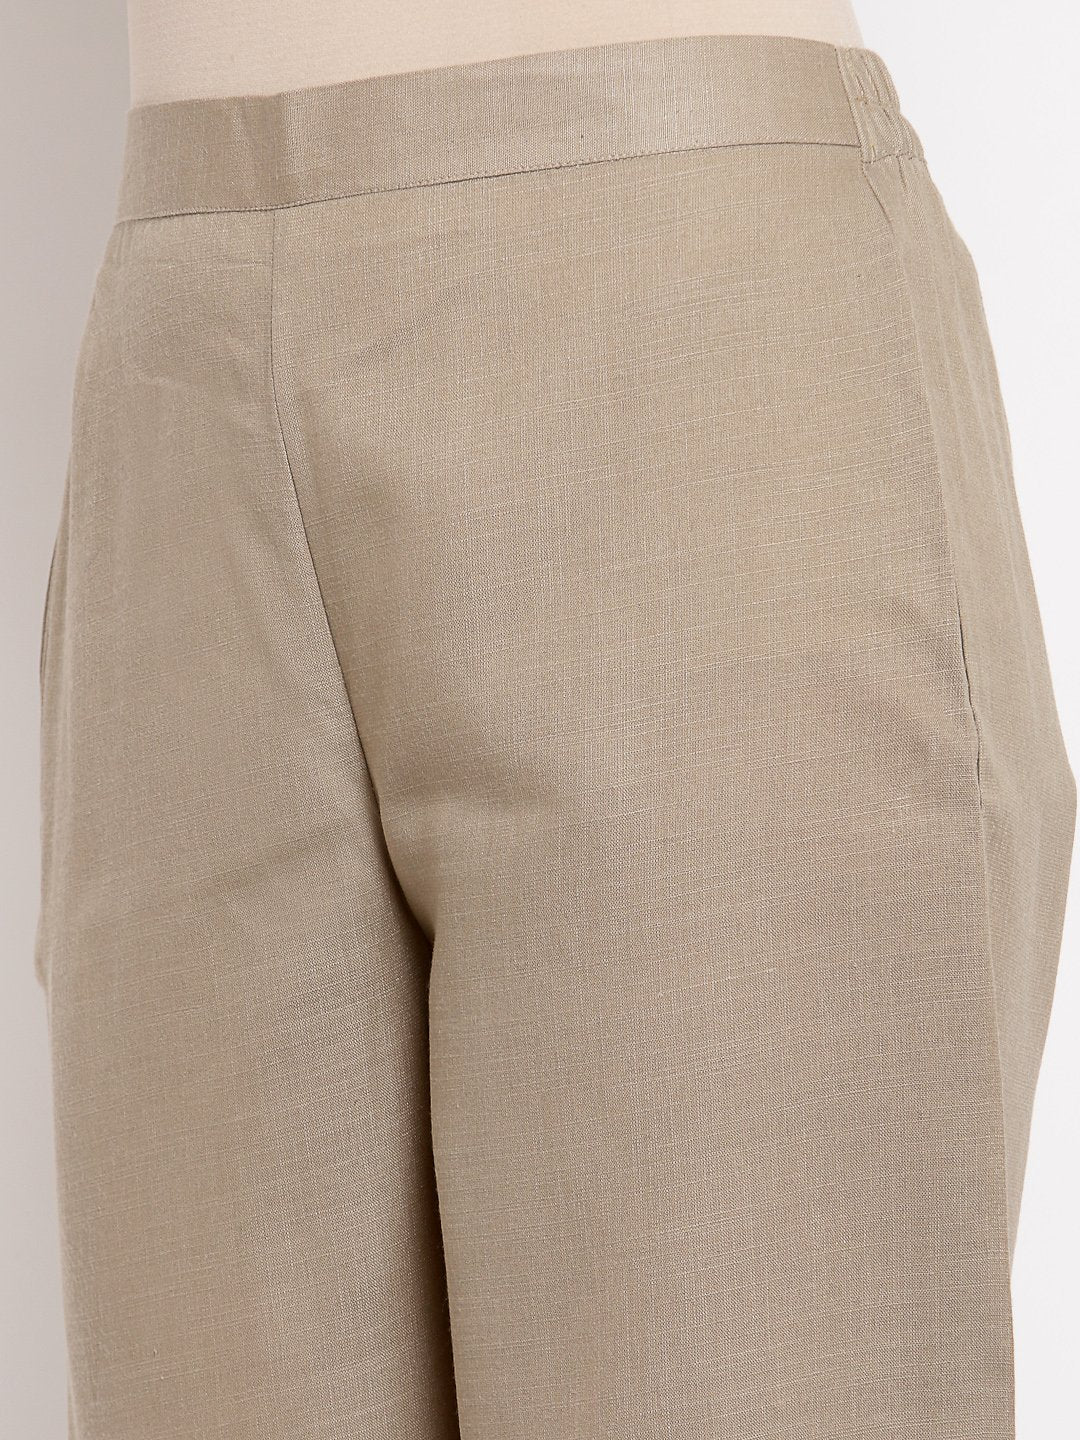 Women's Grey Cotton Solid Casual Trouser - Myshka